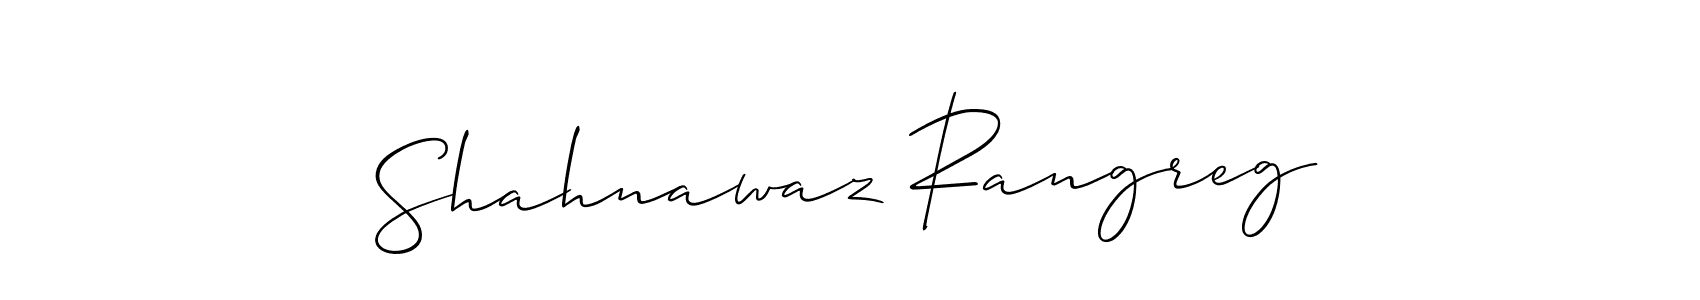 How to make Shahnawaz Rangreg signature? Allison_Script is a professional autograph style. Create handwritten signature for Shahnawaz Rangreg name. Shahnawaz Rangreg signature style 2 images and pictures png